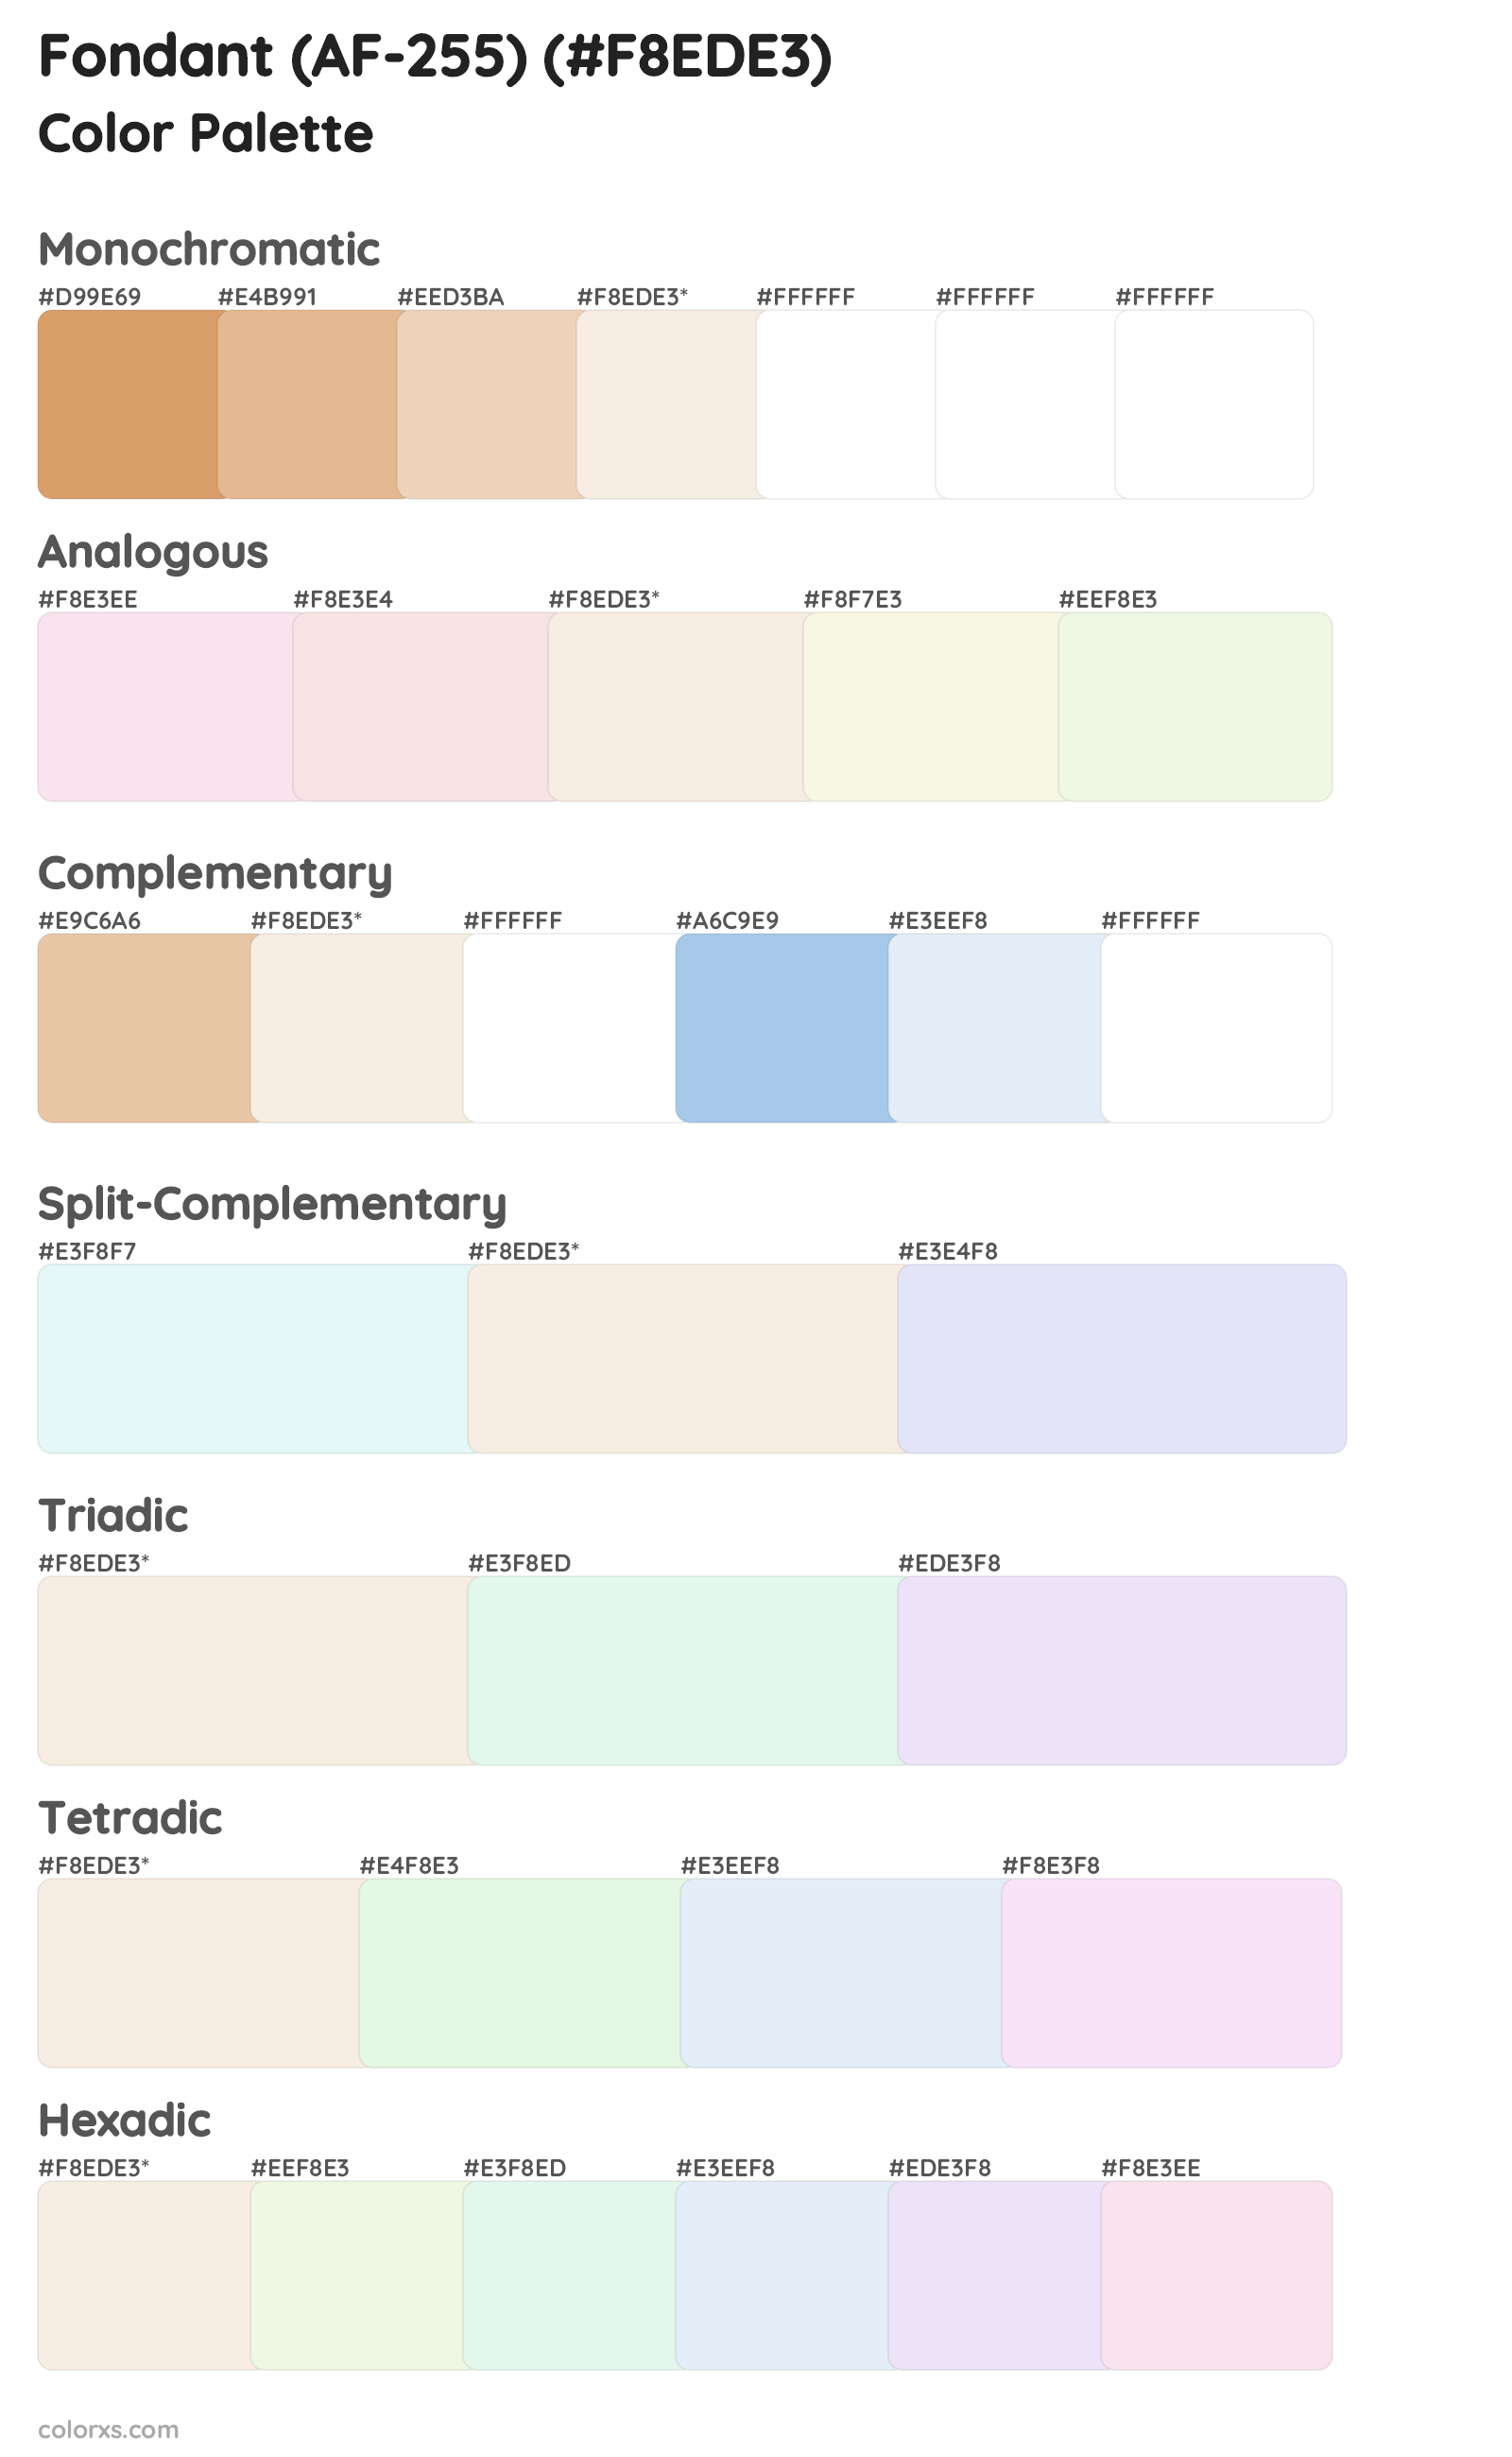 Fondant (AF-255) Color Scheme Palettes